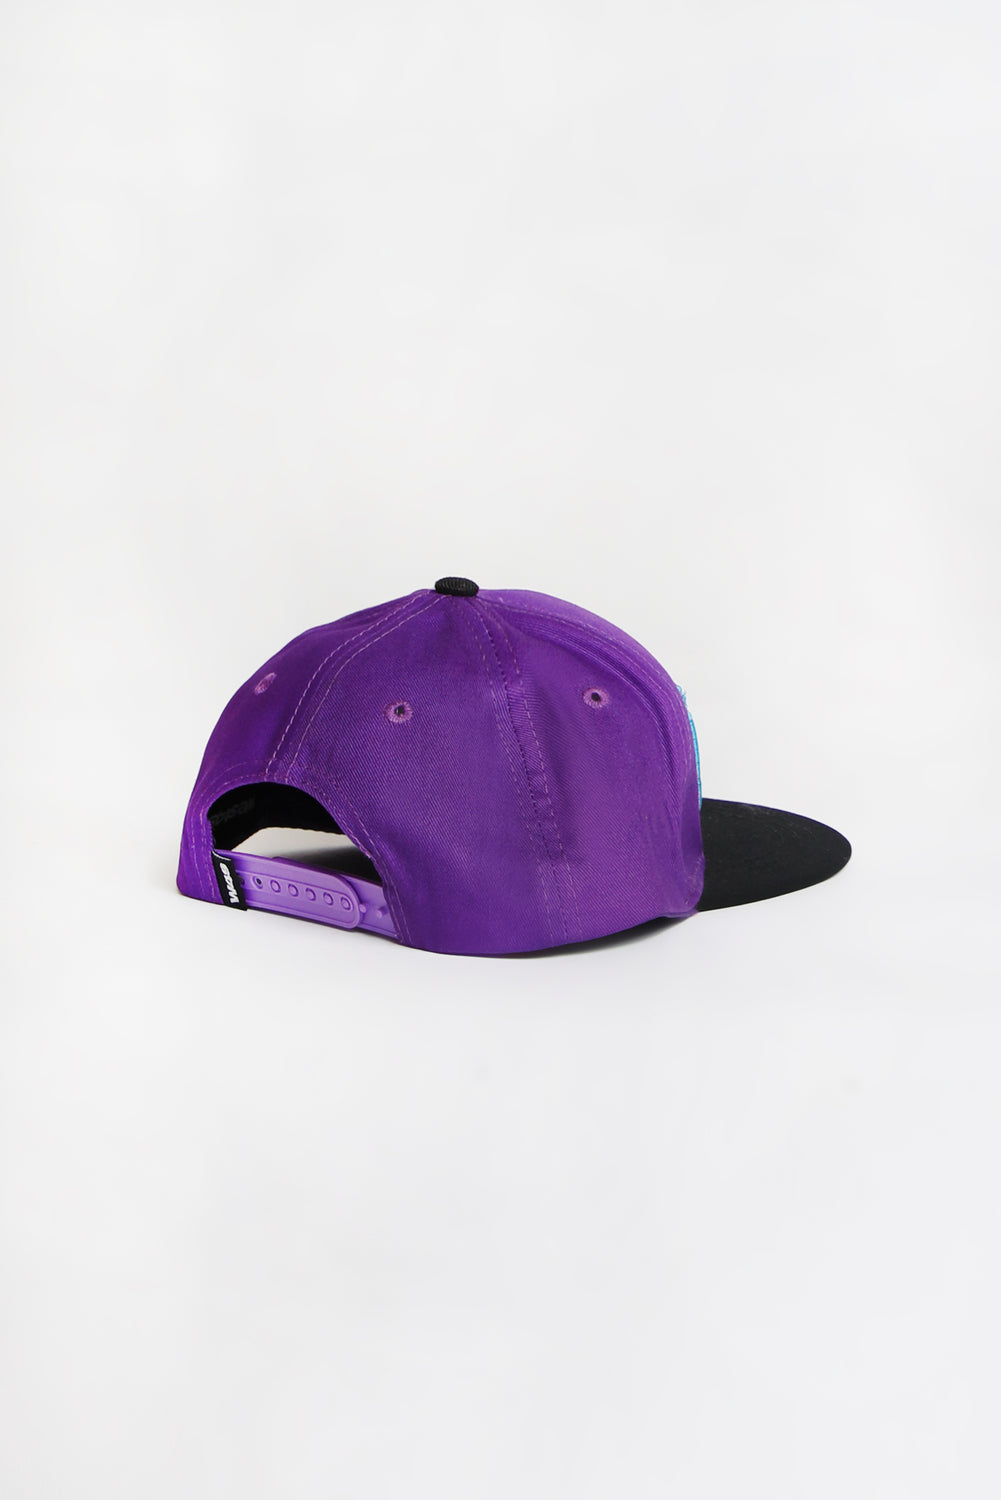 West49 Youth Flames Flat Brim Hat Purple